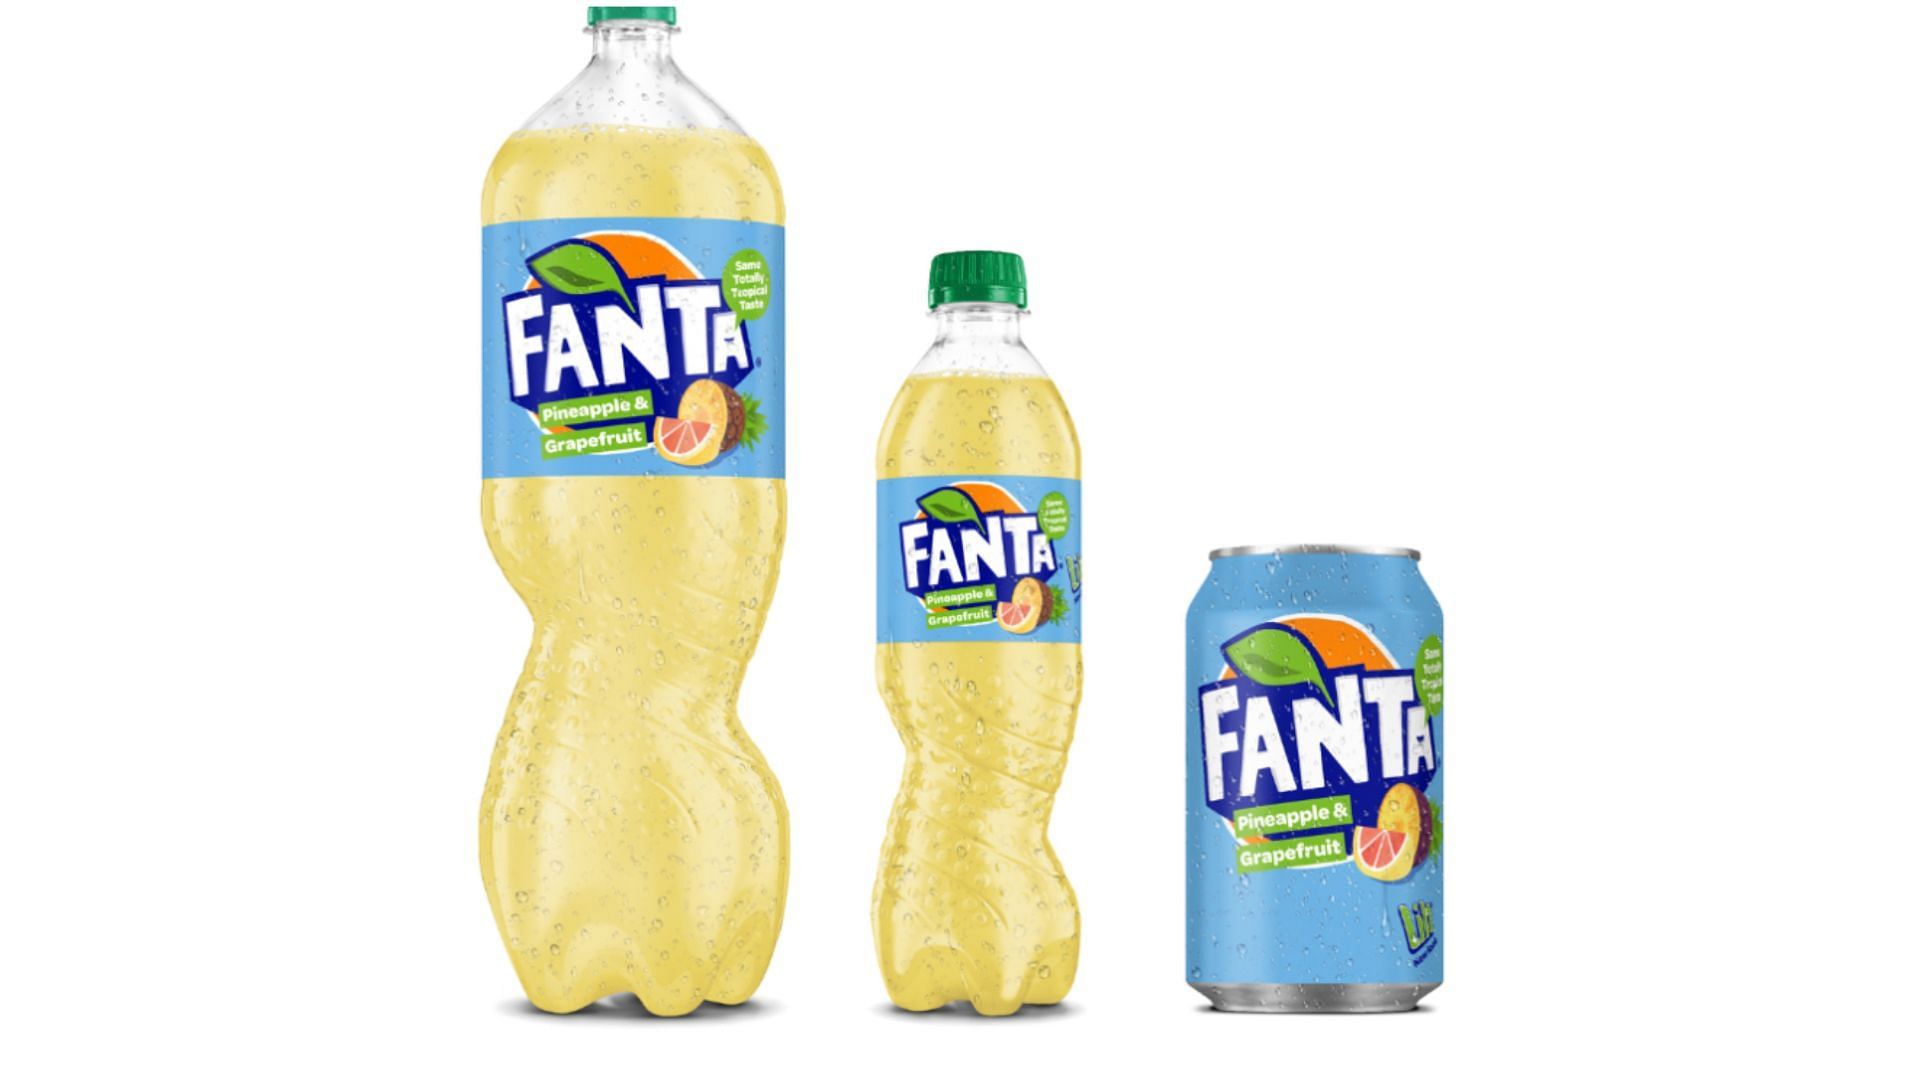 The rebranded packaging of Lilt Soda as Fanta Pineapple & Grapefruit (Image via Coca-Cola)